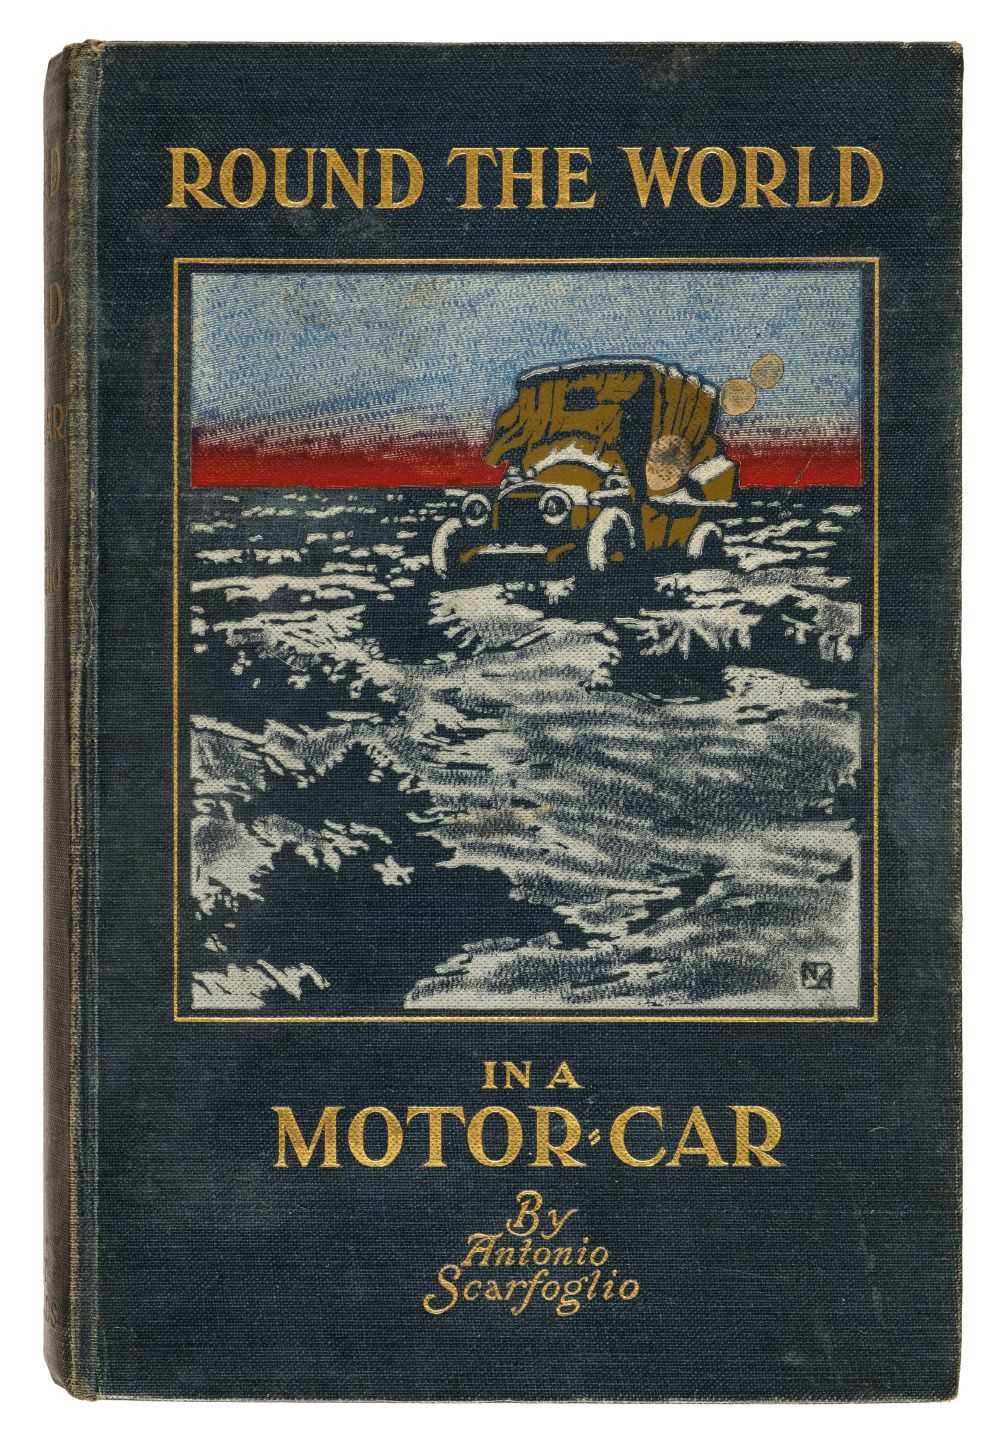 Lot 65 - Scarfoglio (Antonio). Round the World in a Motor-Car, 1st edition, 1909